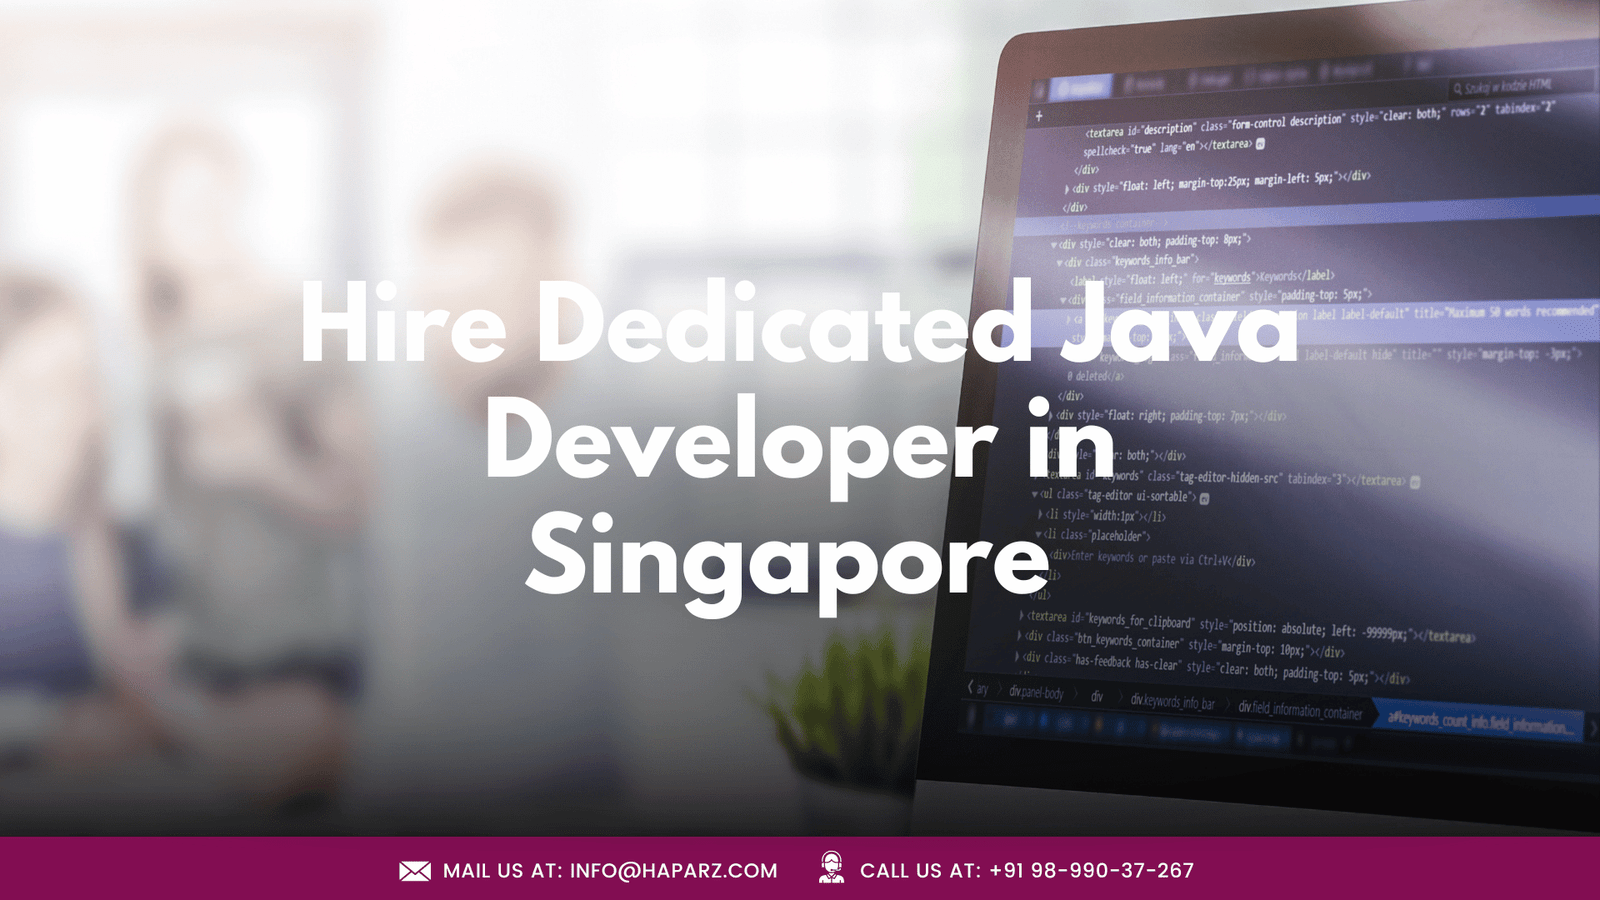 Hire dedicated Java Developer in Singapore